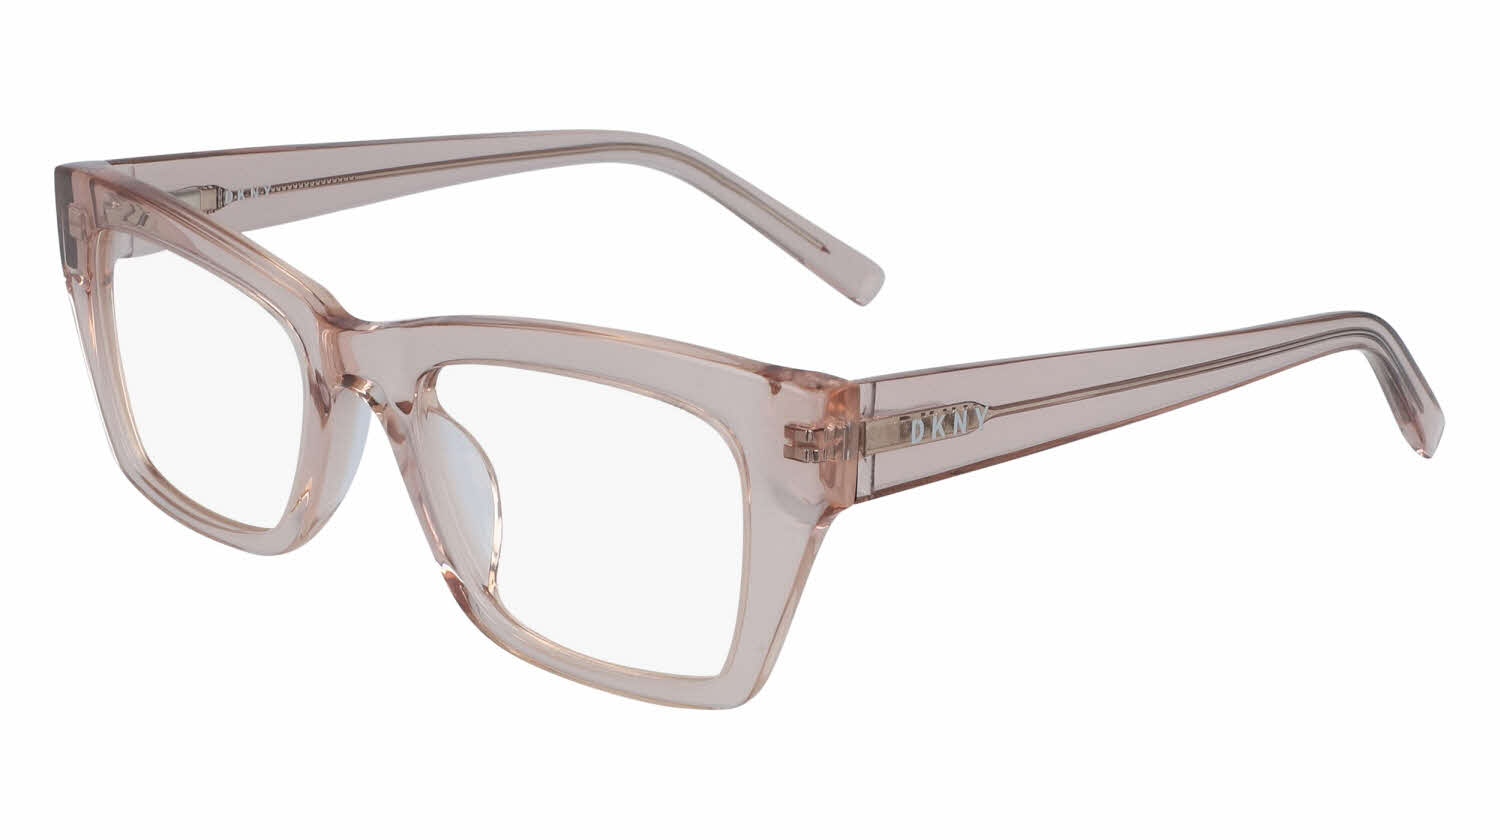 DKNY DK5021 Women's Eyeglasses In Pink